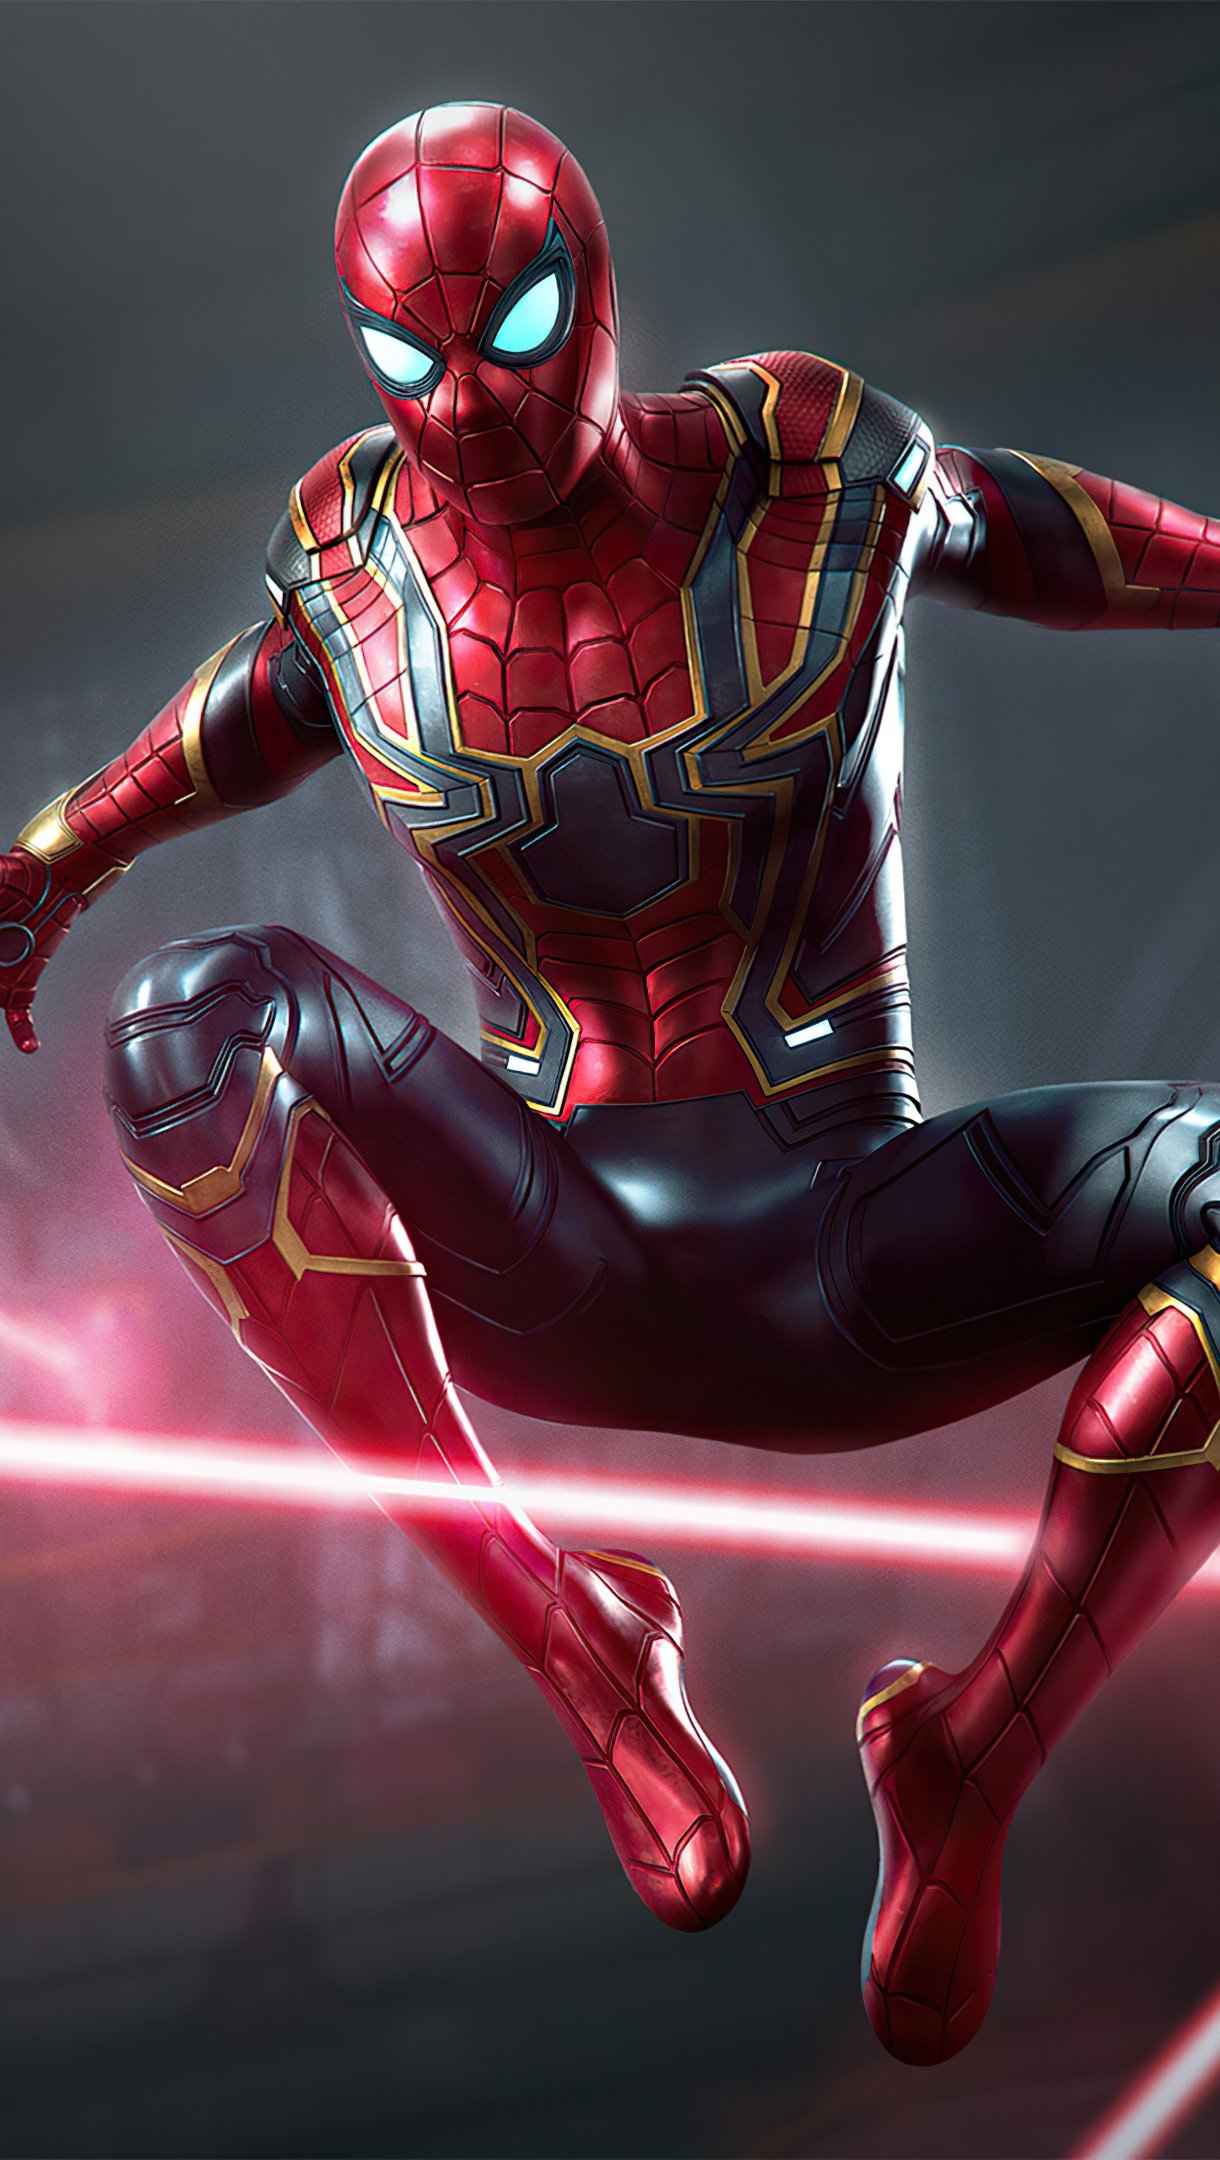 Spider Man Marvel Avengers Wallpaper 4k Ultra HD ID:10921